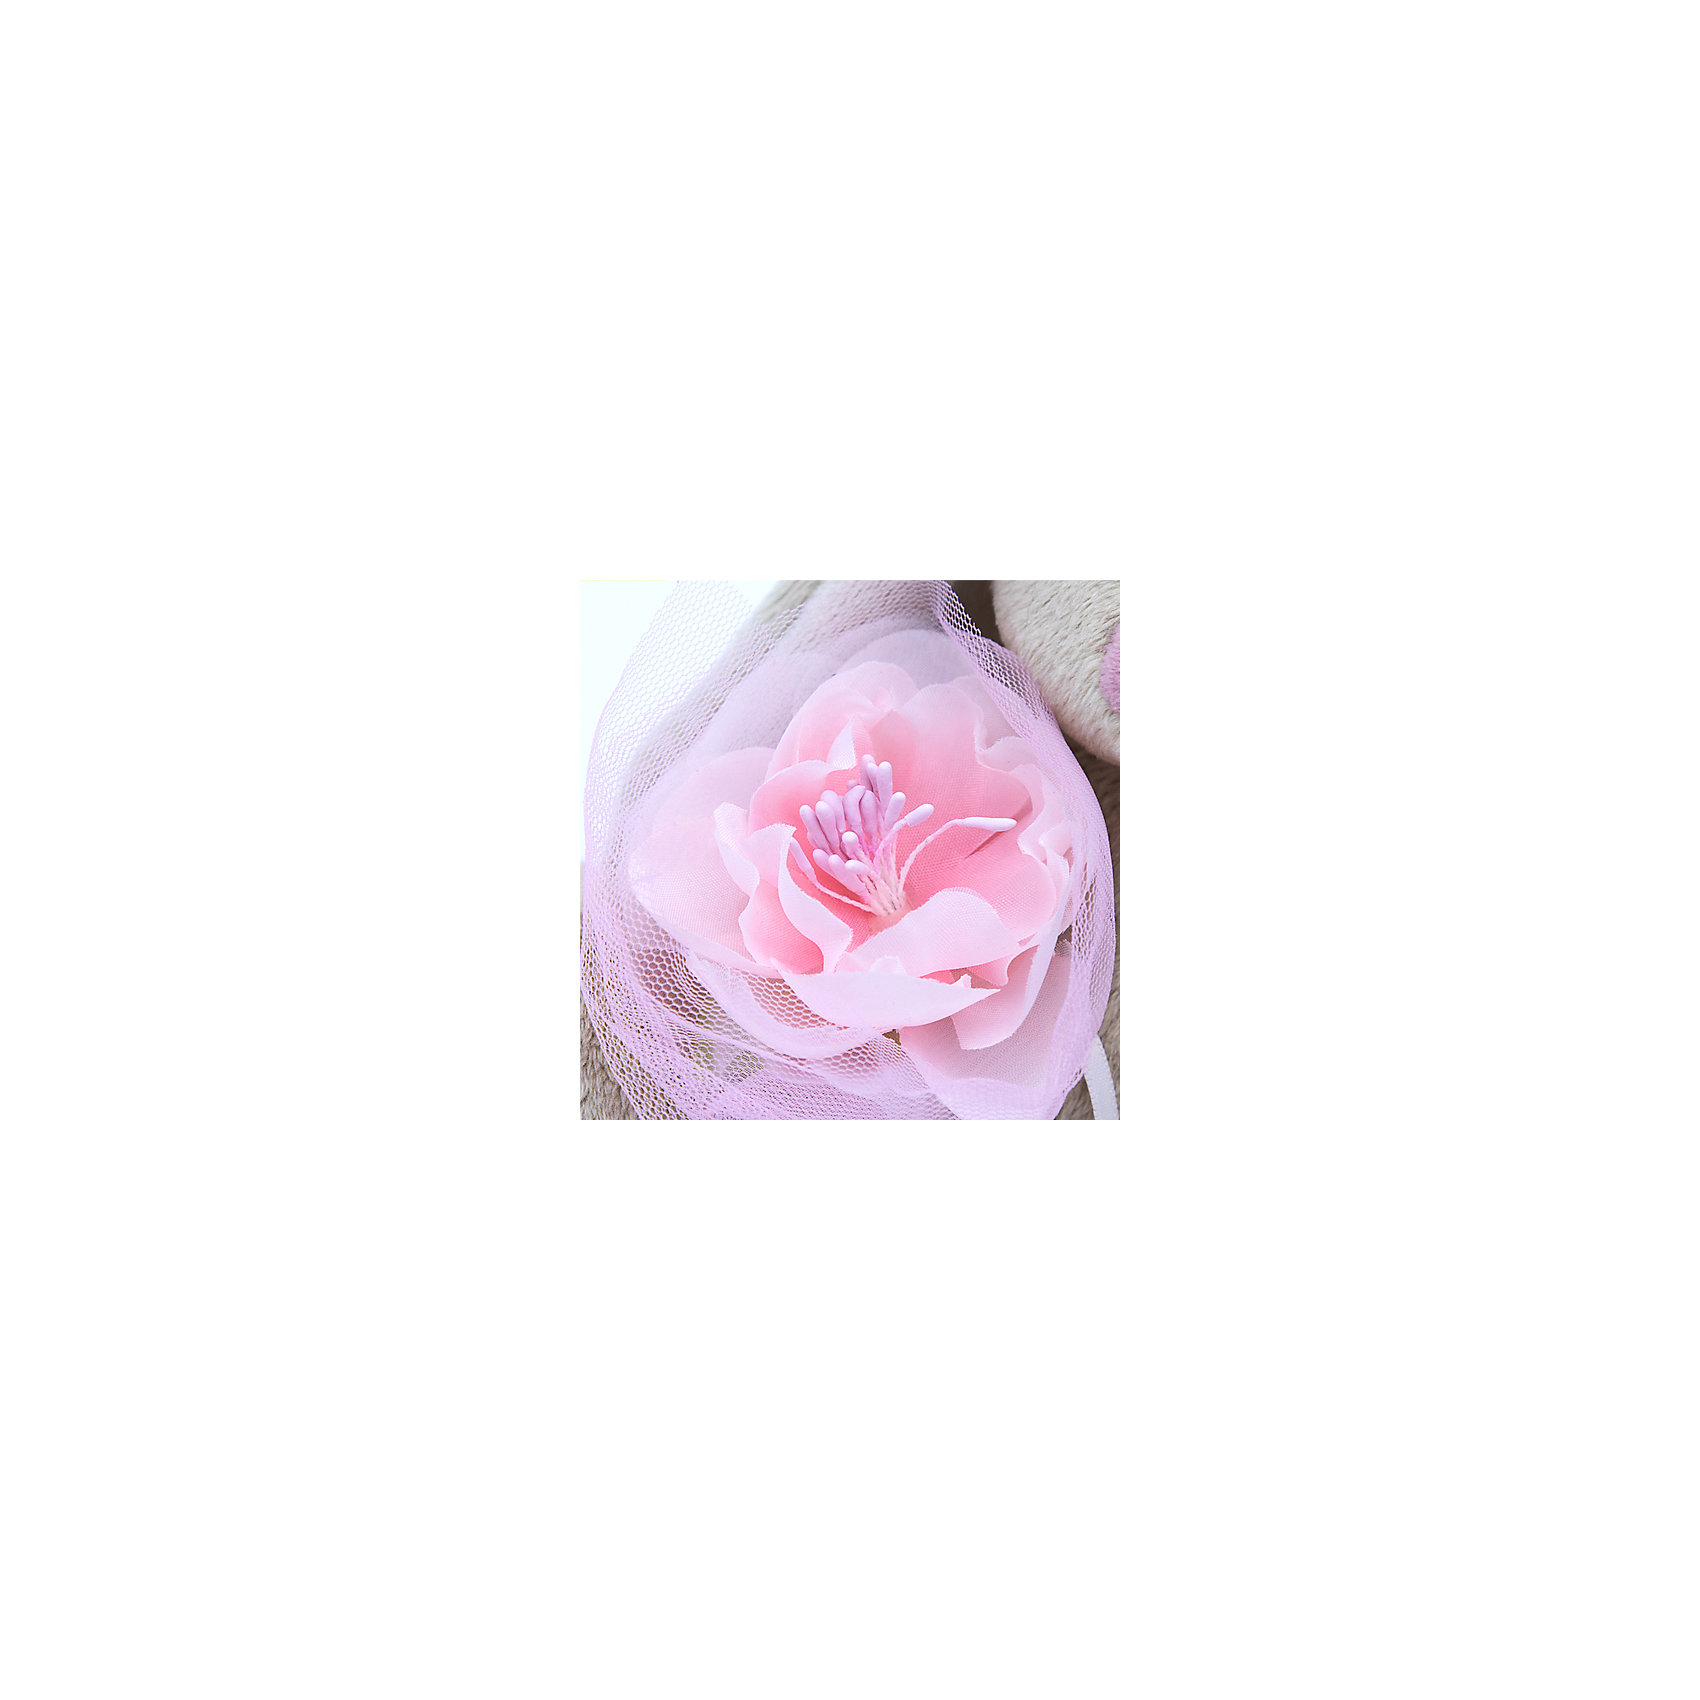 фото Мягкая игрушка Budi Basa Зайка Ми c розовым цветком, 15 см